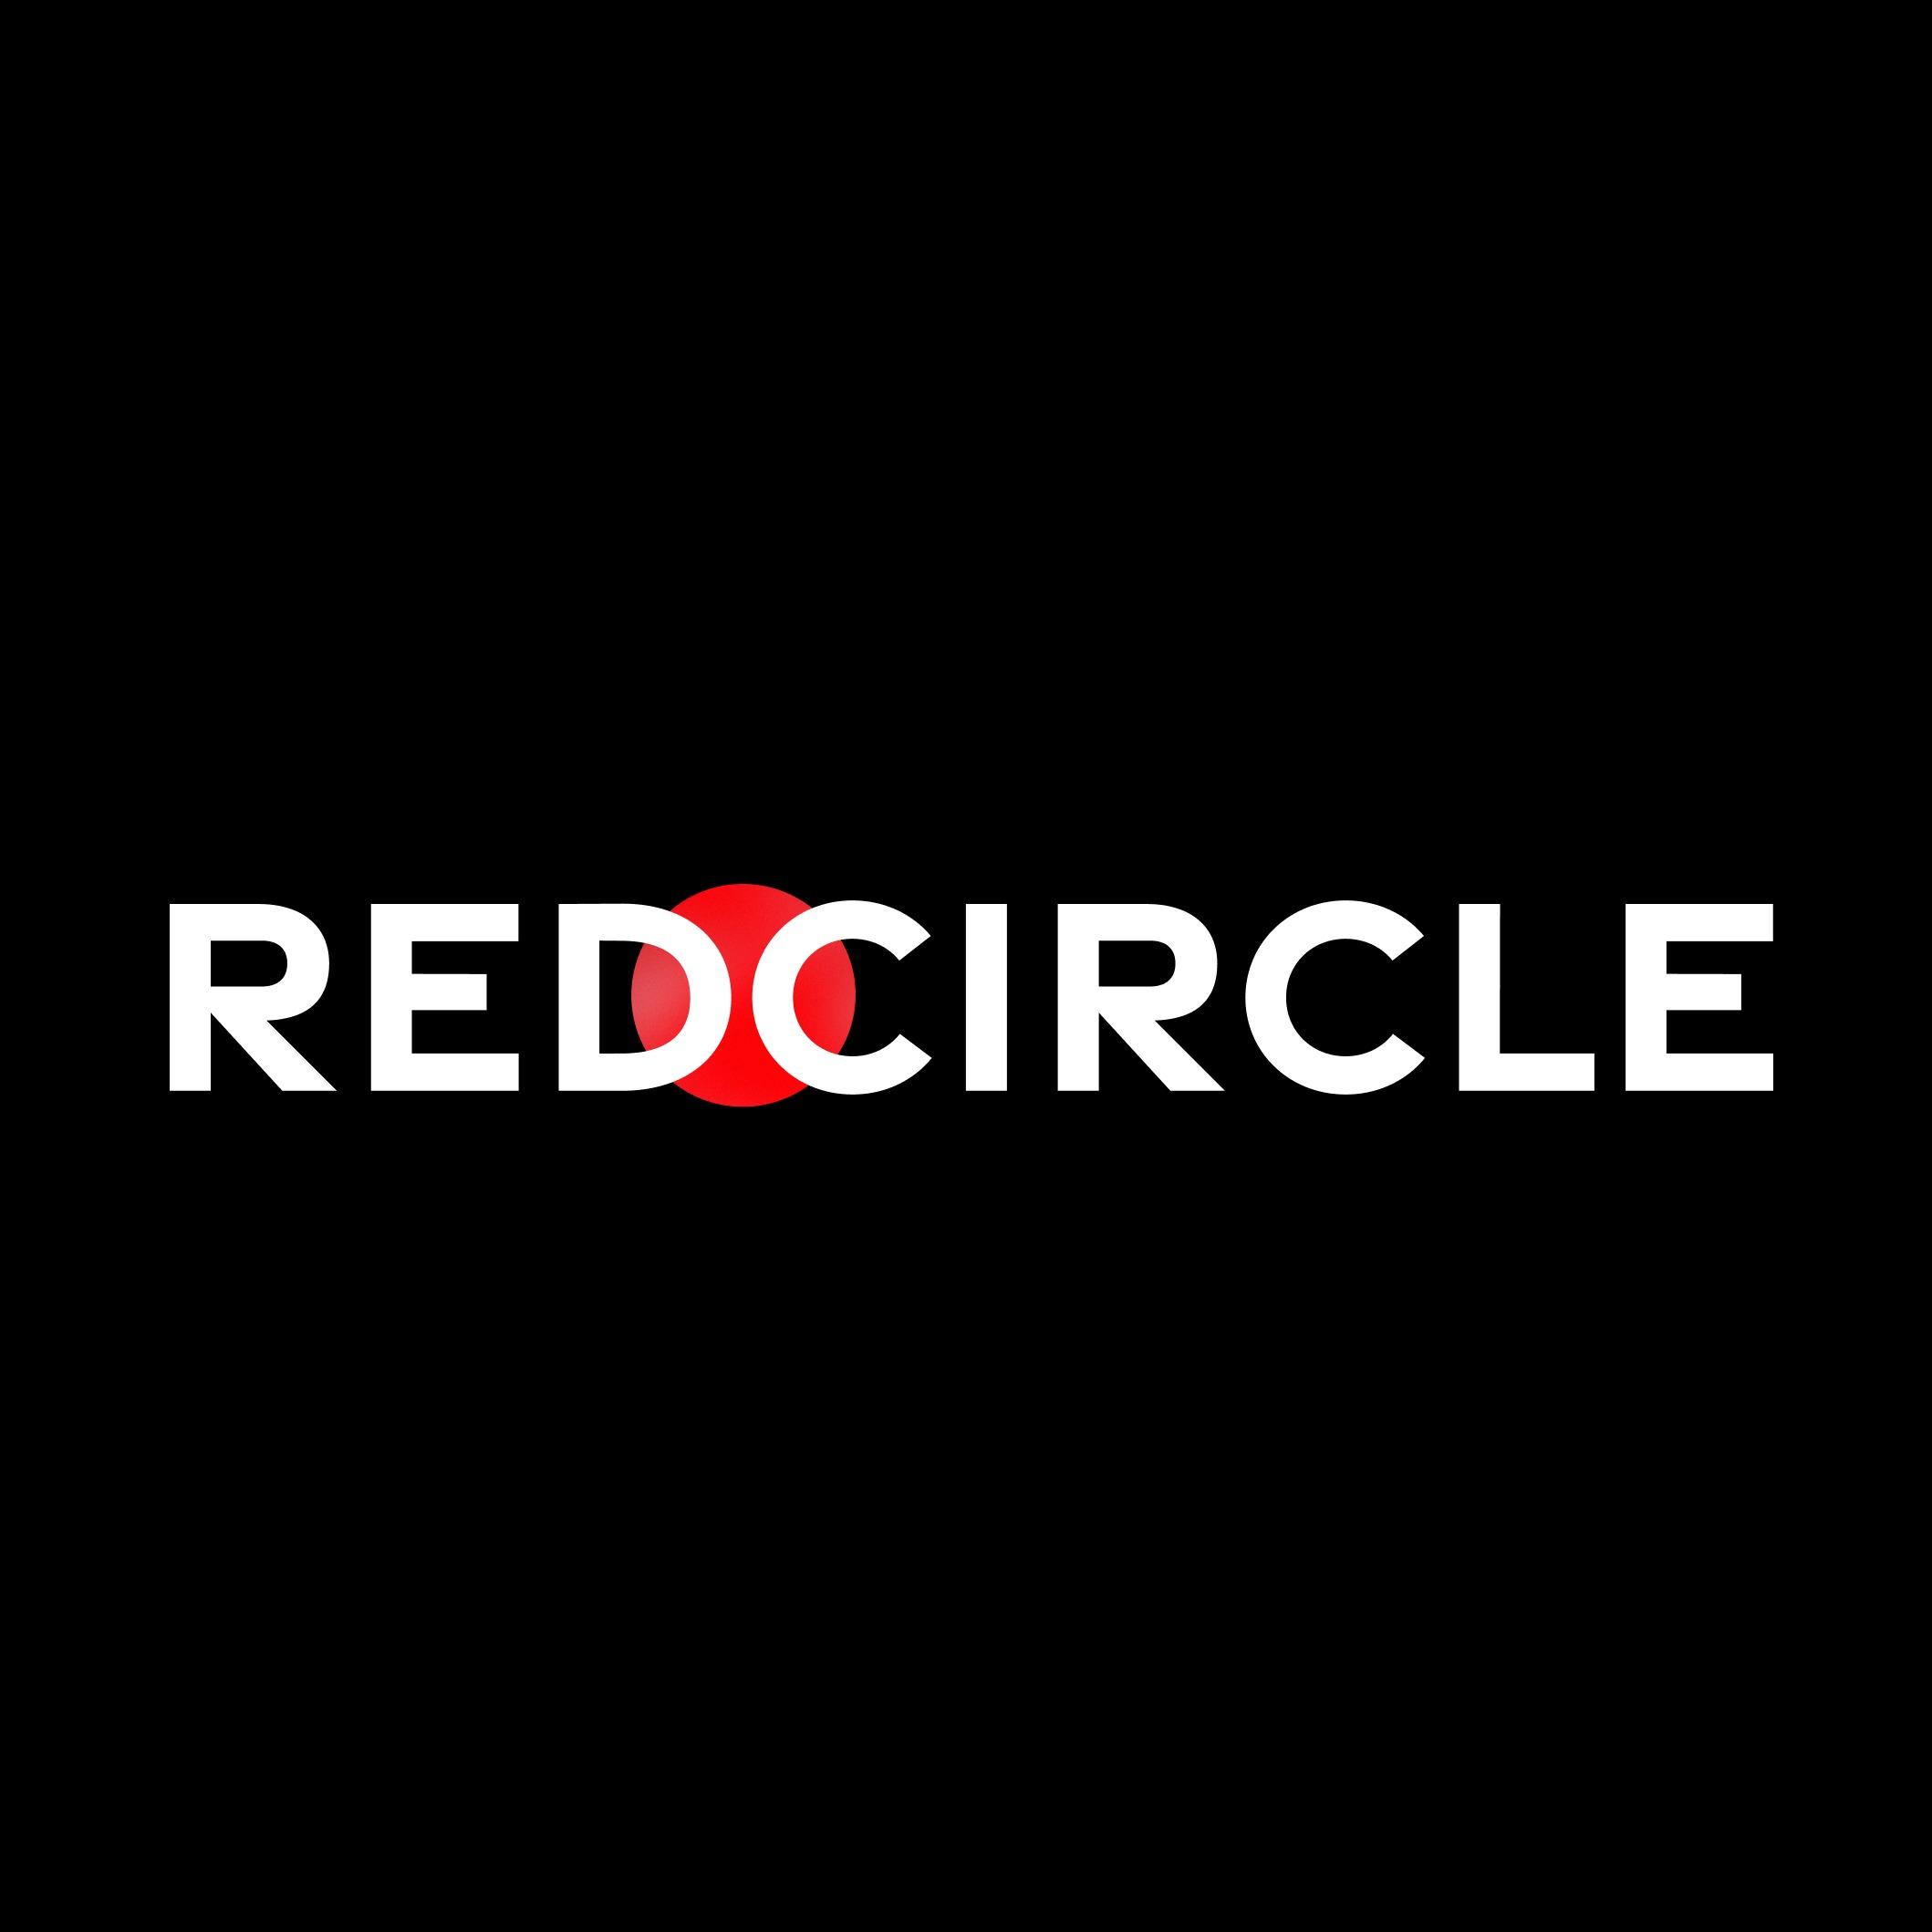 RedCircle Insiders